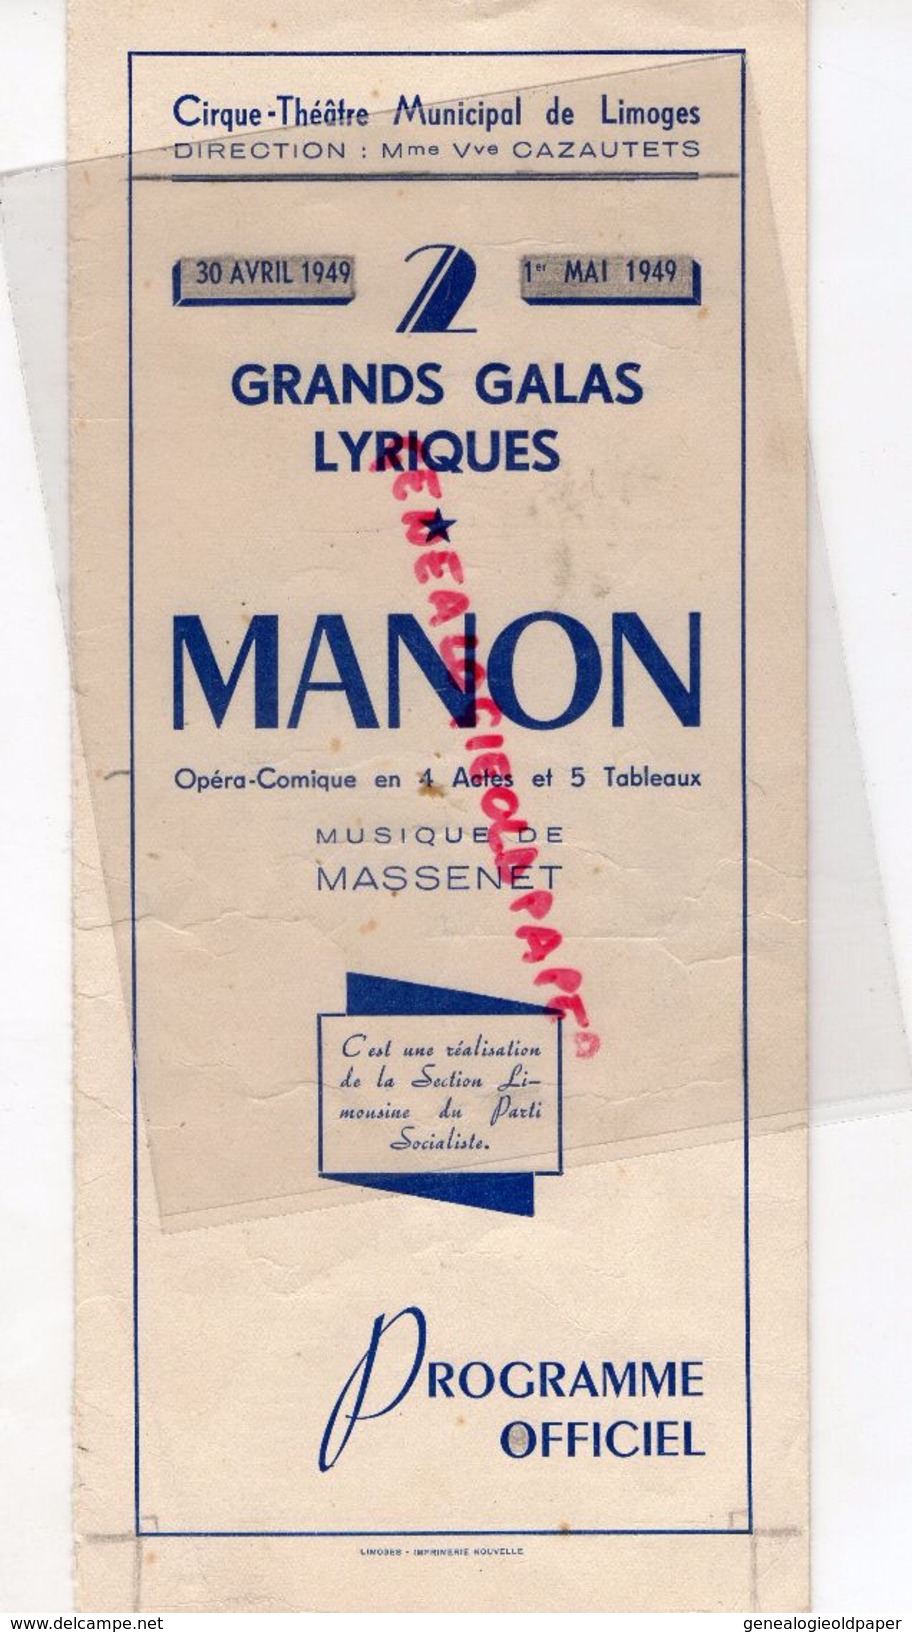 87 -LIMOGES- PROGRAMME CIRQUE THEATRE-30 AVRIL -1 MAI 1949-MANON MASSENET-RENEE TARN-JOSE MALLABRERA-MARIO FRANZINI - Programme